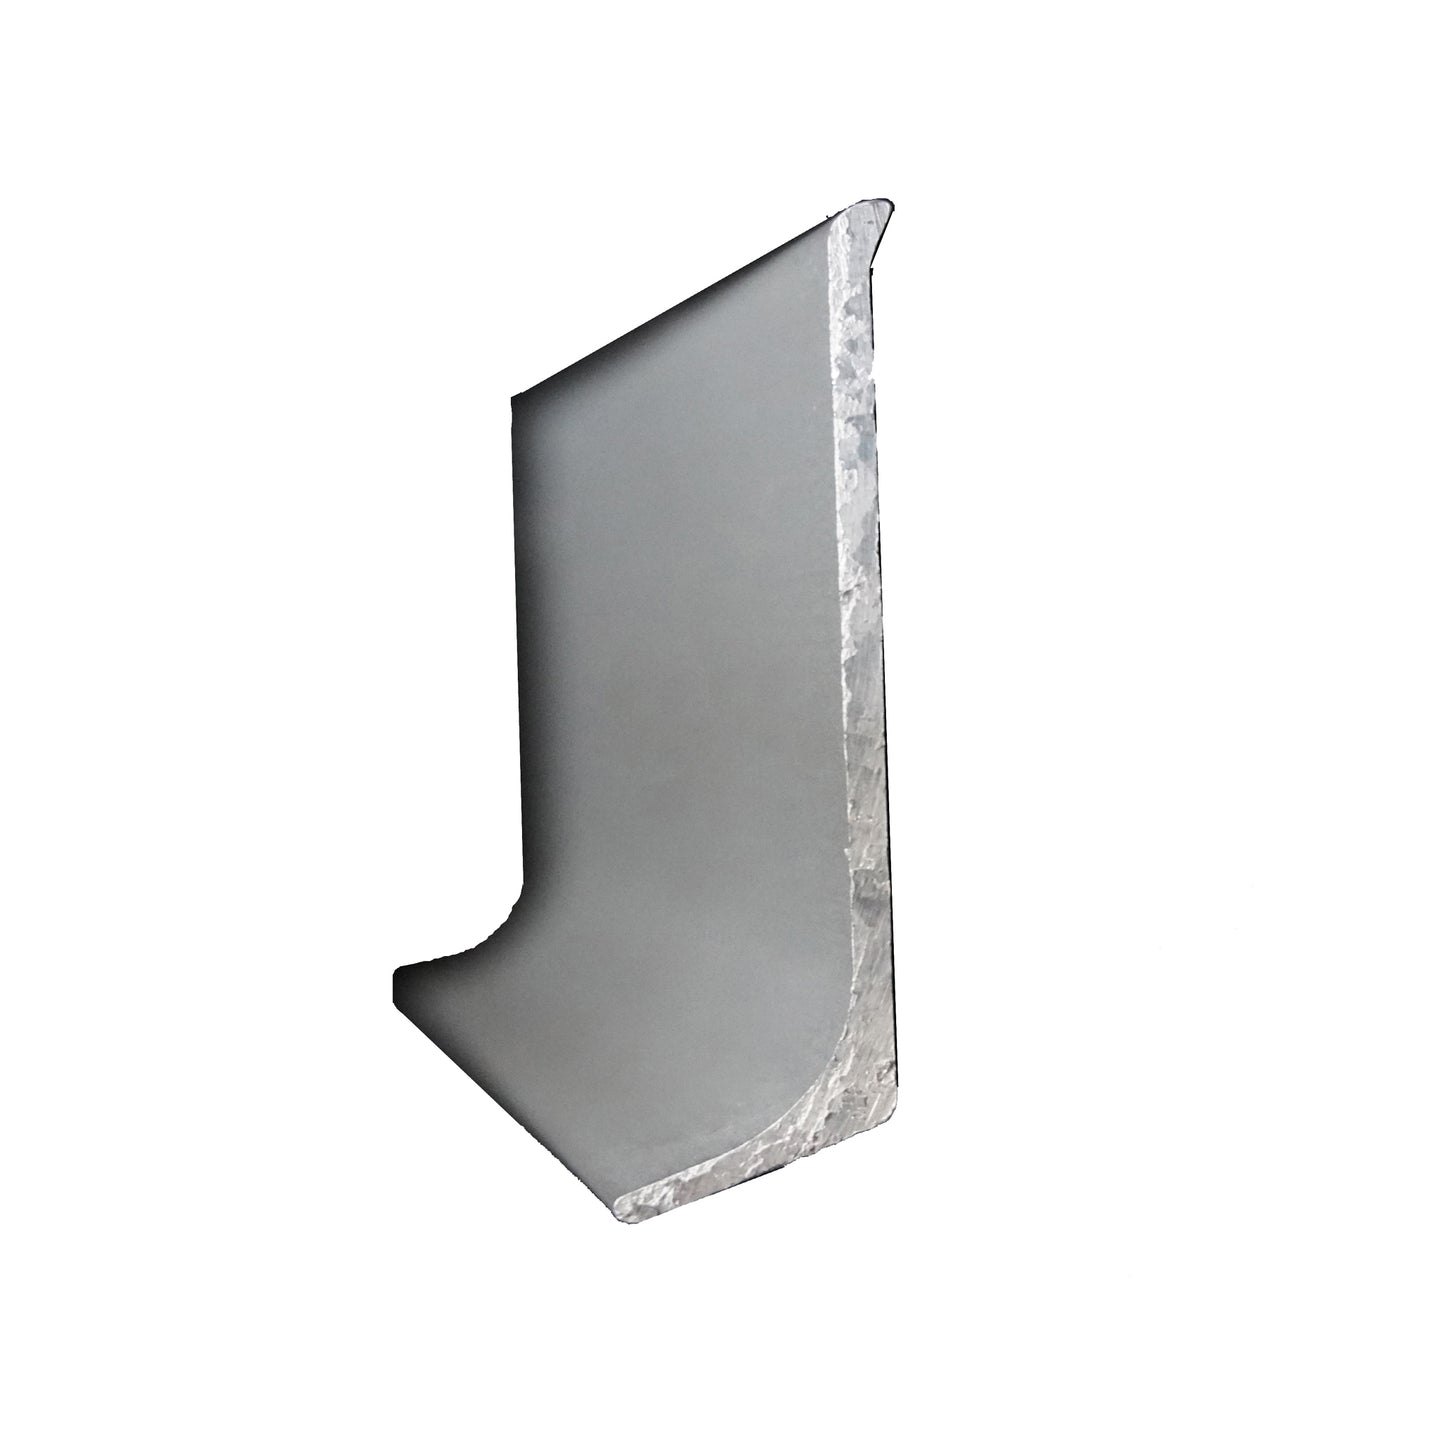 Aluminiun-Sockelleisten 40/11mm Silber eloxiert